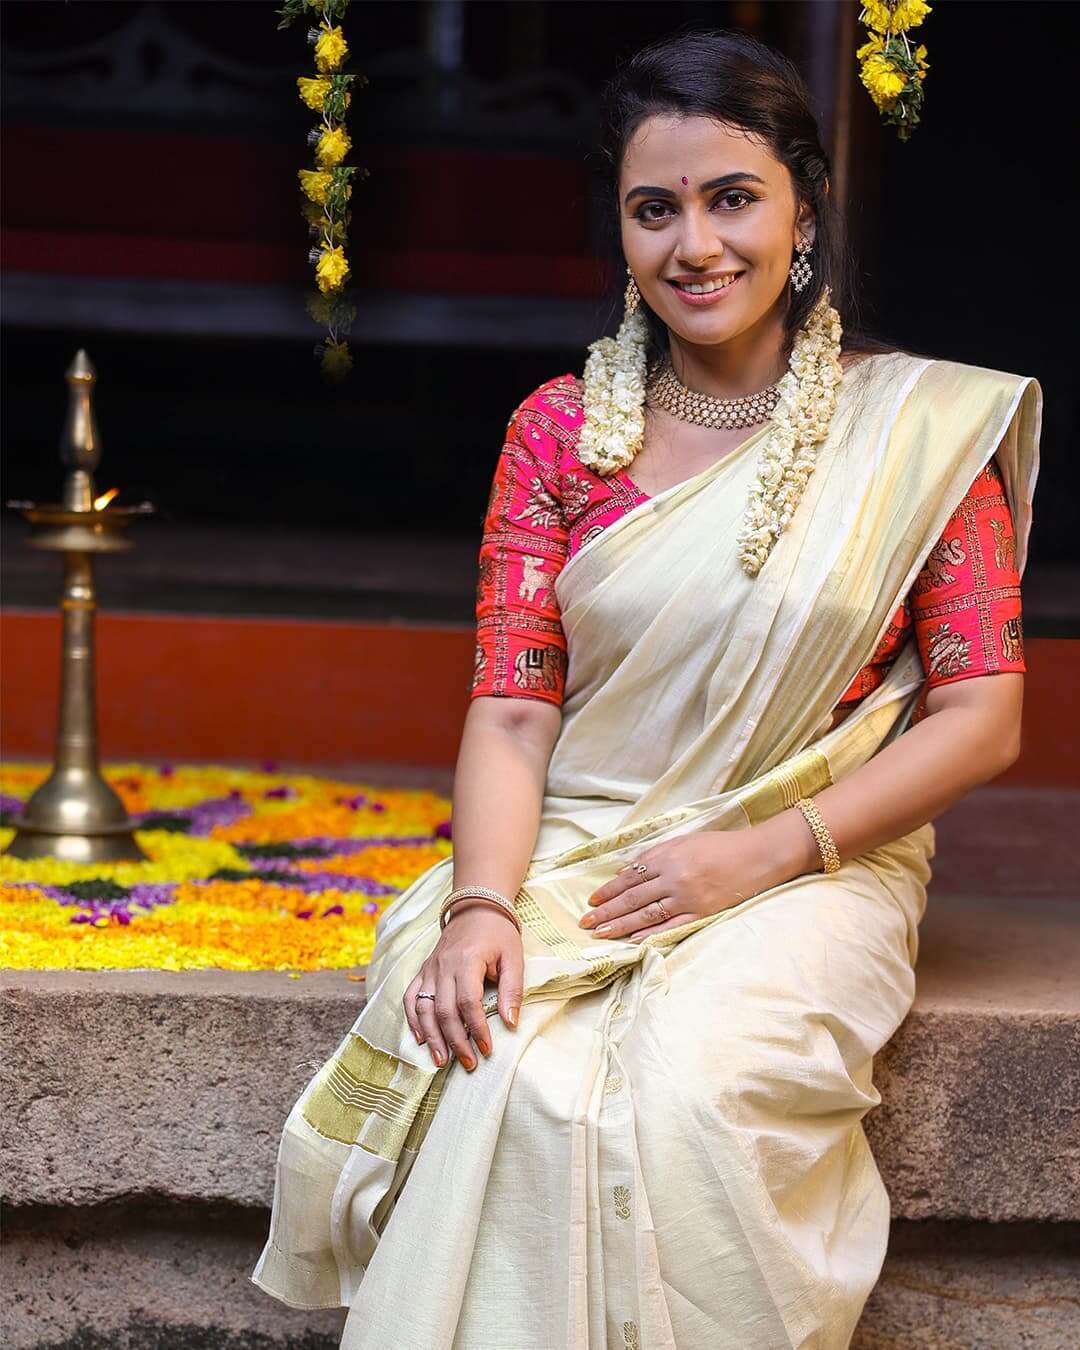 Dhanya Mary Varghese in traditional Kerala saree